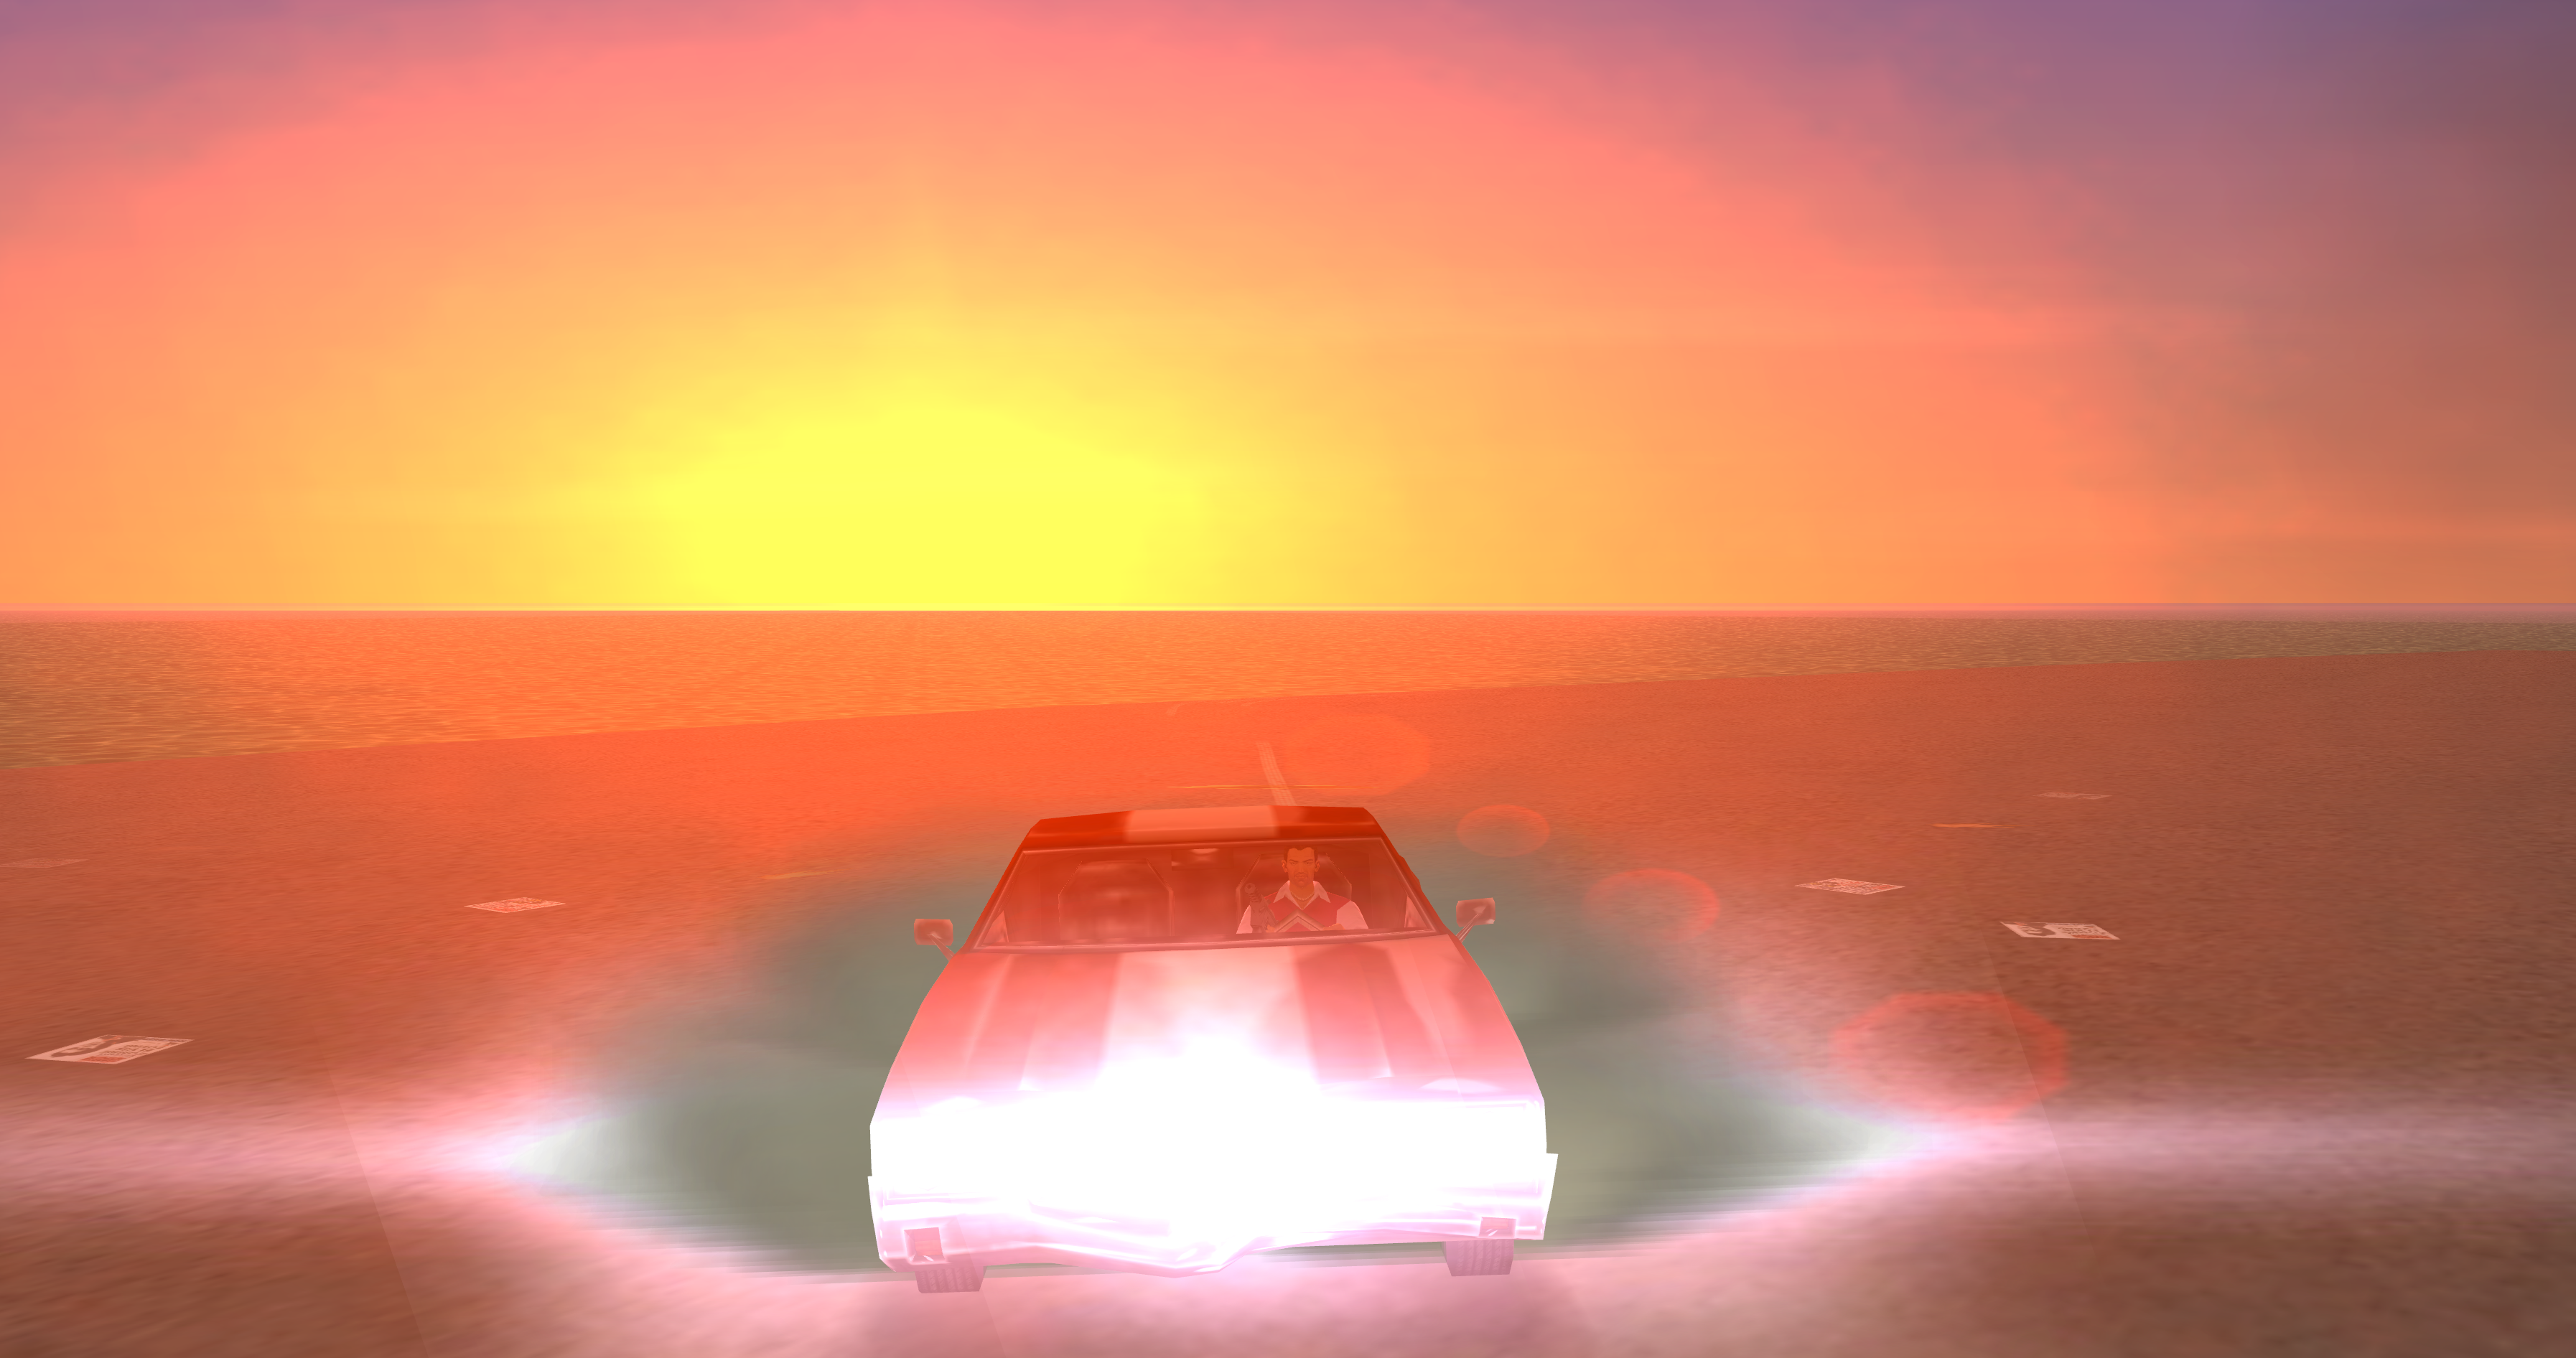 Grand Theft Auto Vice City Sunset Beach Tommy Vercetti Ocean View 3588x1892